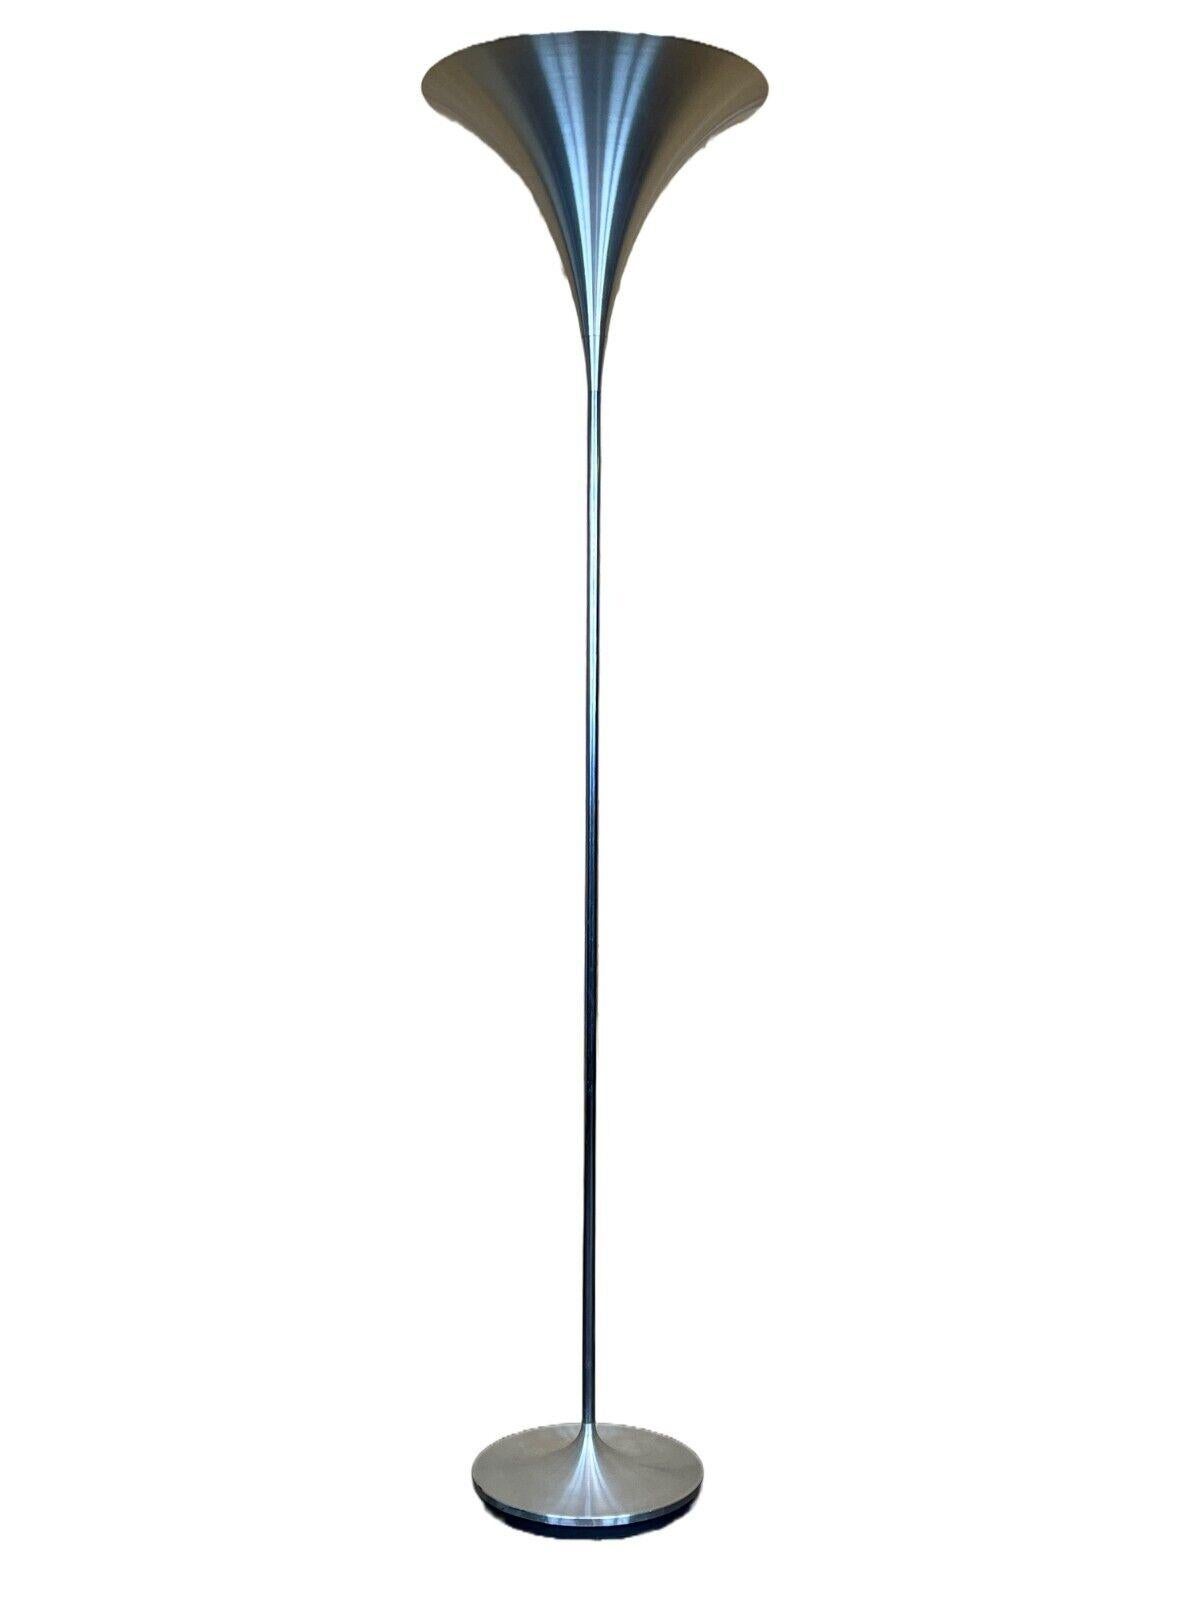 60s 70s Lamp floor lamp aluminum Doria lamps space age design.

Object: floor lamp

Manufacturer: Doria

Condition: good

Age: around 1960-1970

Dimensions:

Diameter = 39cm
Height = 160.5cm

Other notes:

E27 socket

The pictures